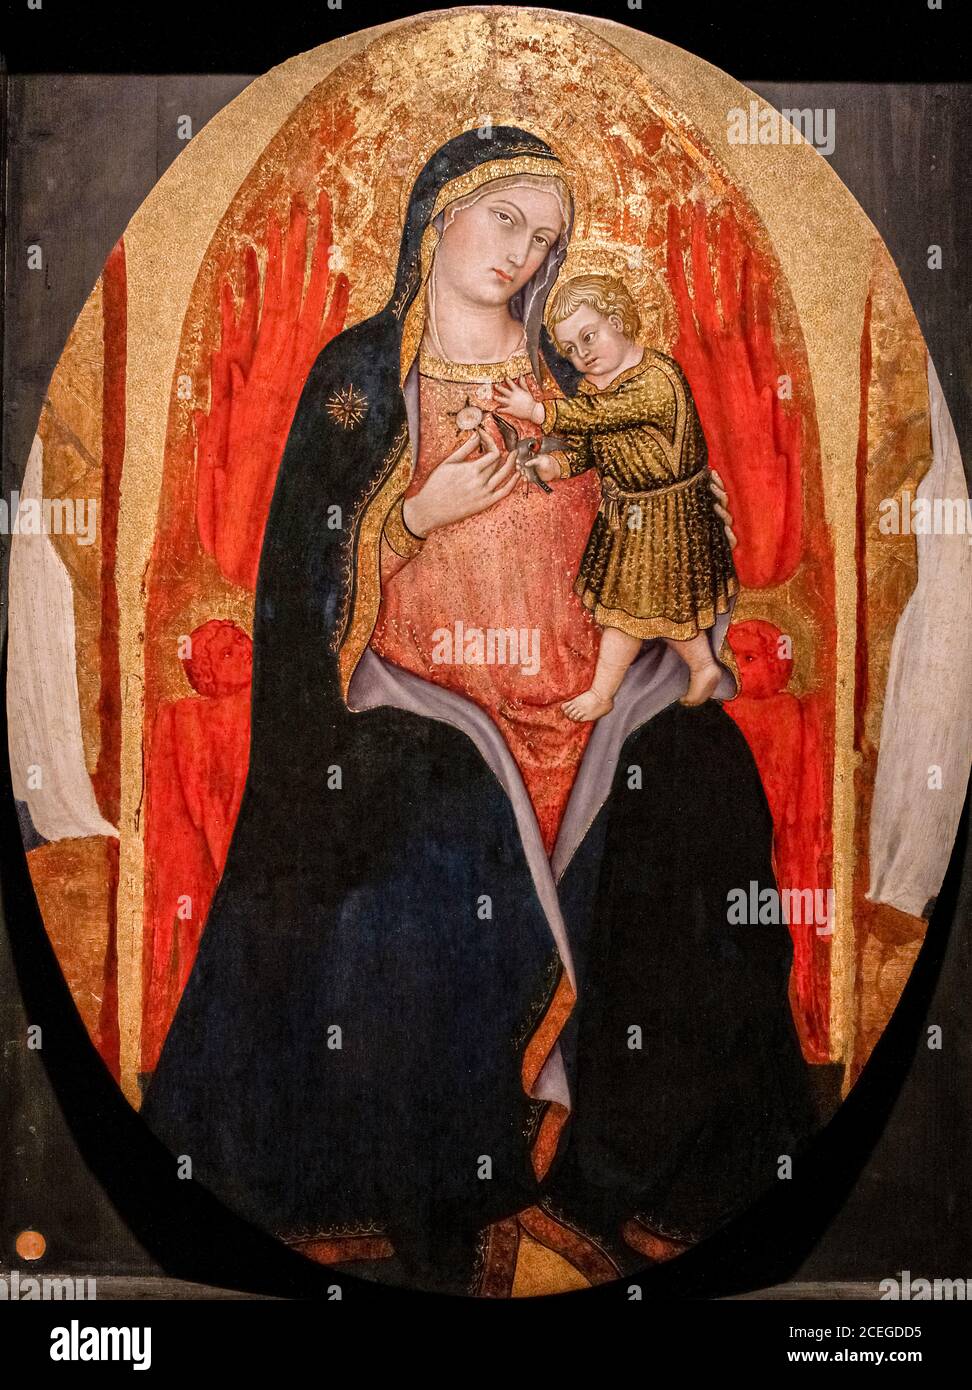 Italy Umbria Perugia - National Gallery of Umbria: Monographic Exhibition  (1362-1422) - Madonna of the Rose - 1414. Stock Photo